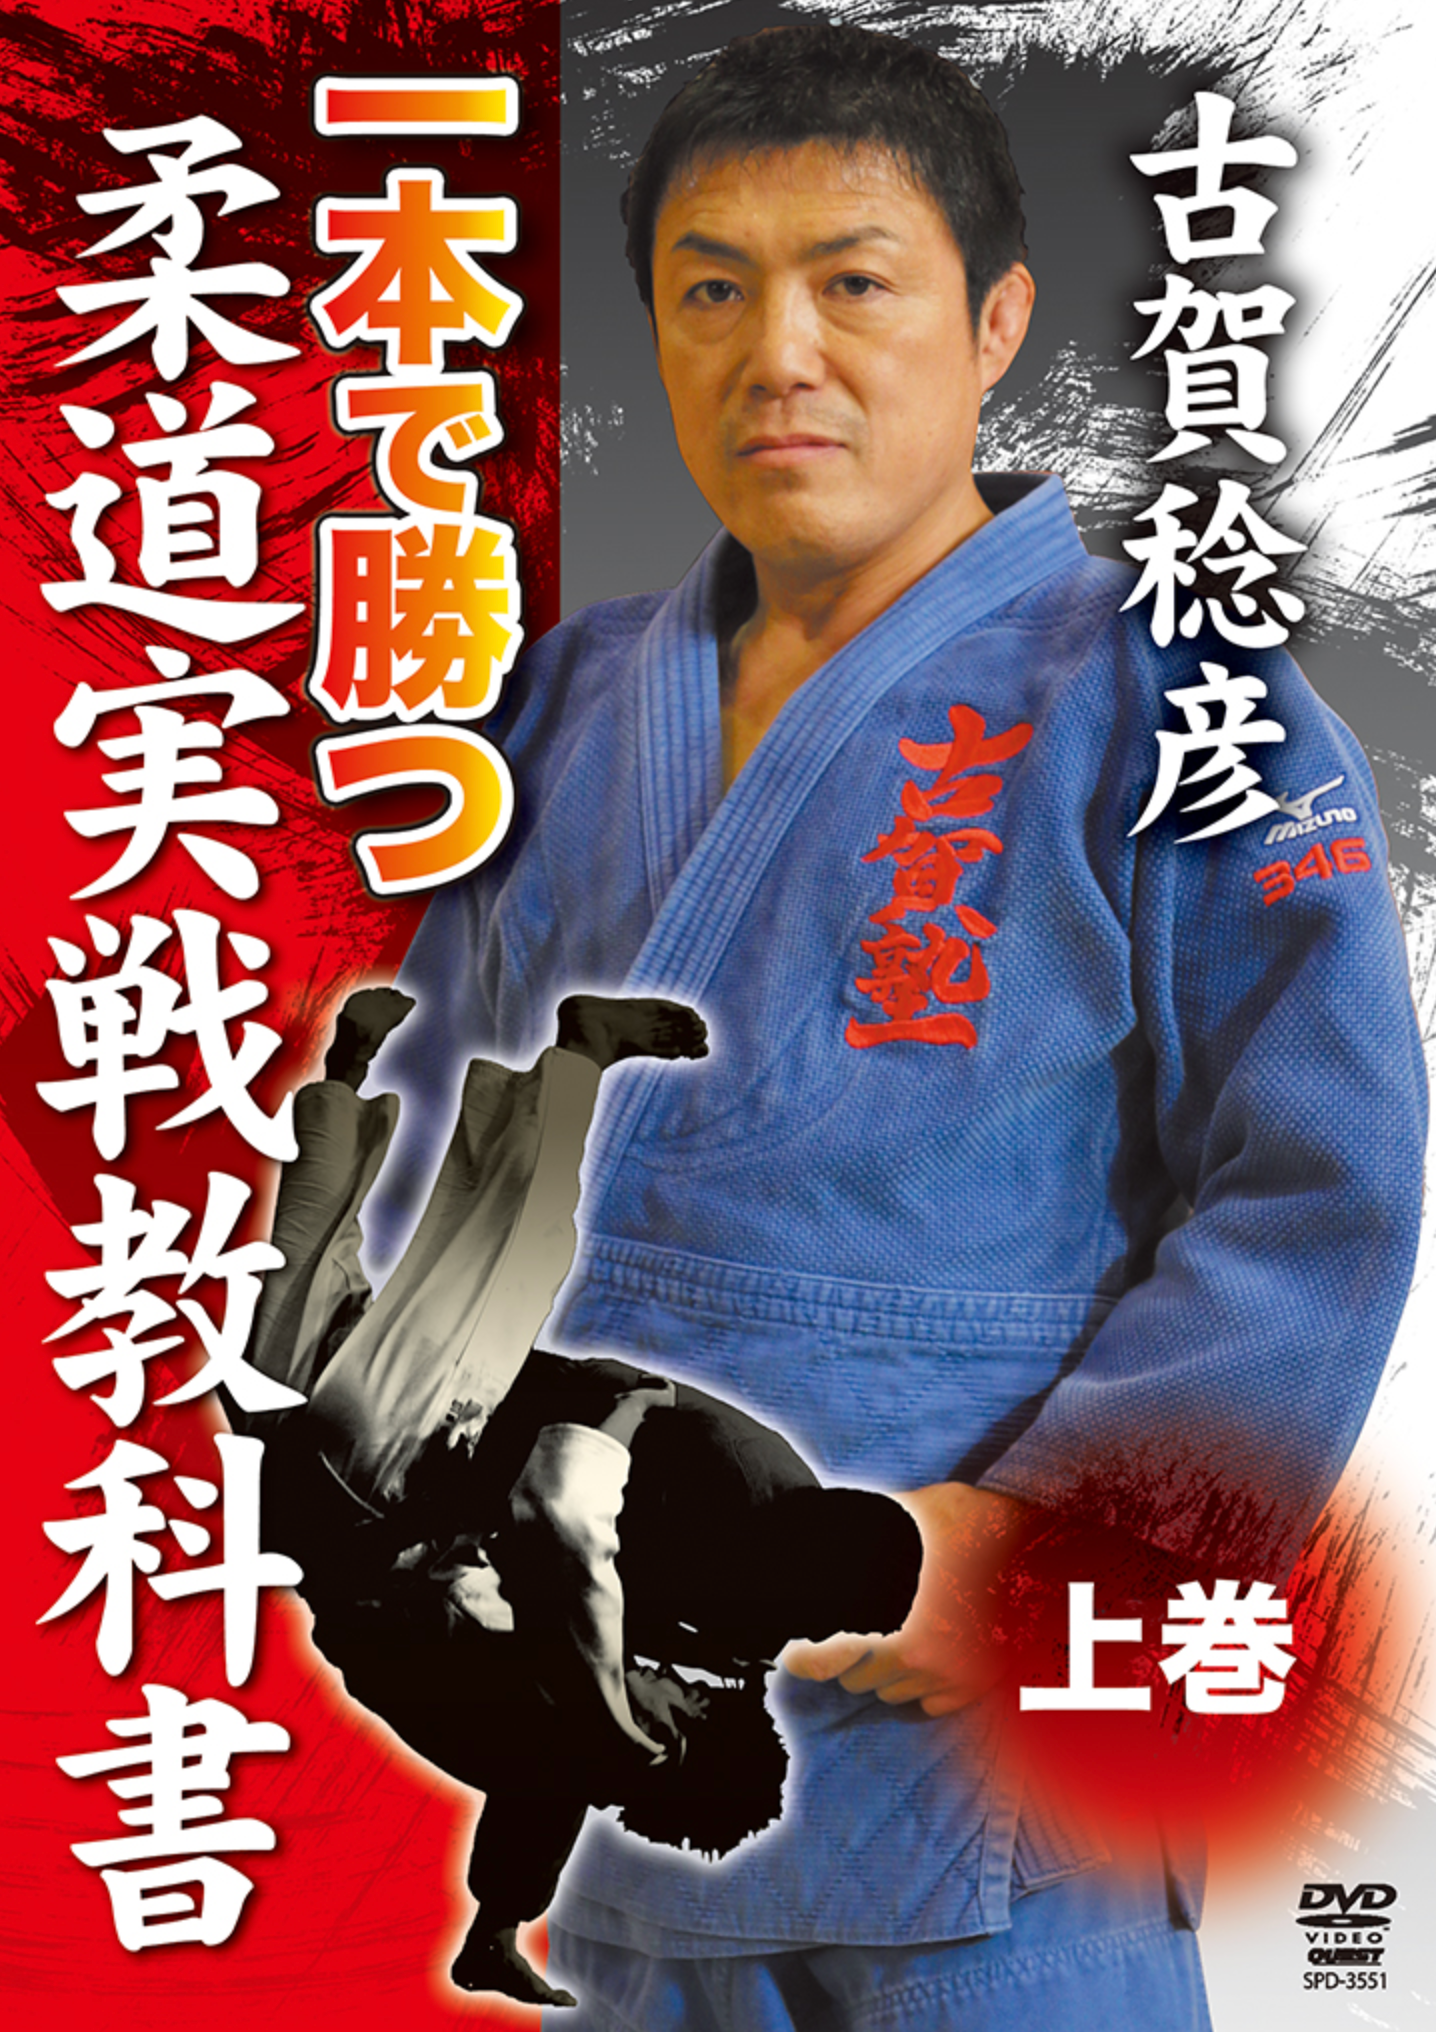 Win by Ippon Judo DVD 1 with Toshihiko Koga - Budovideos Inc